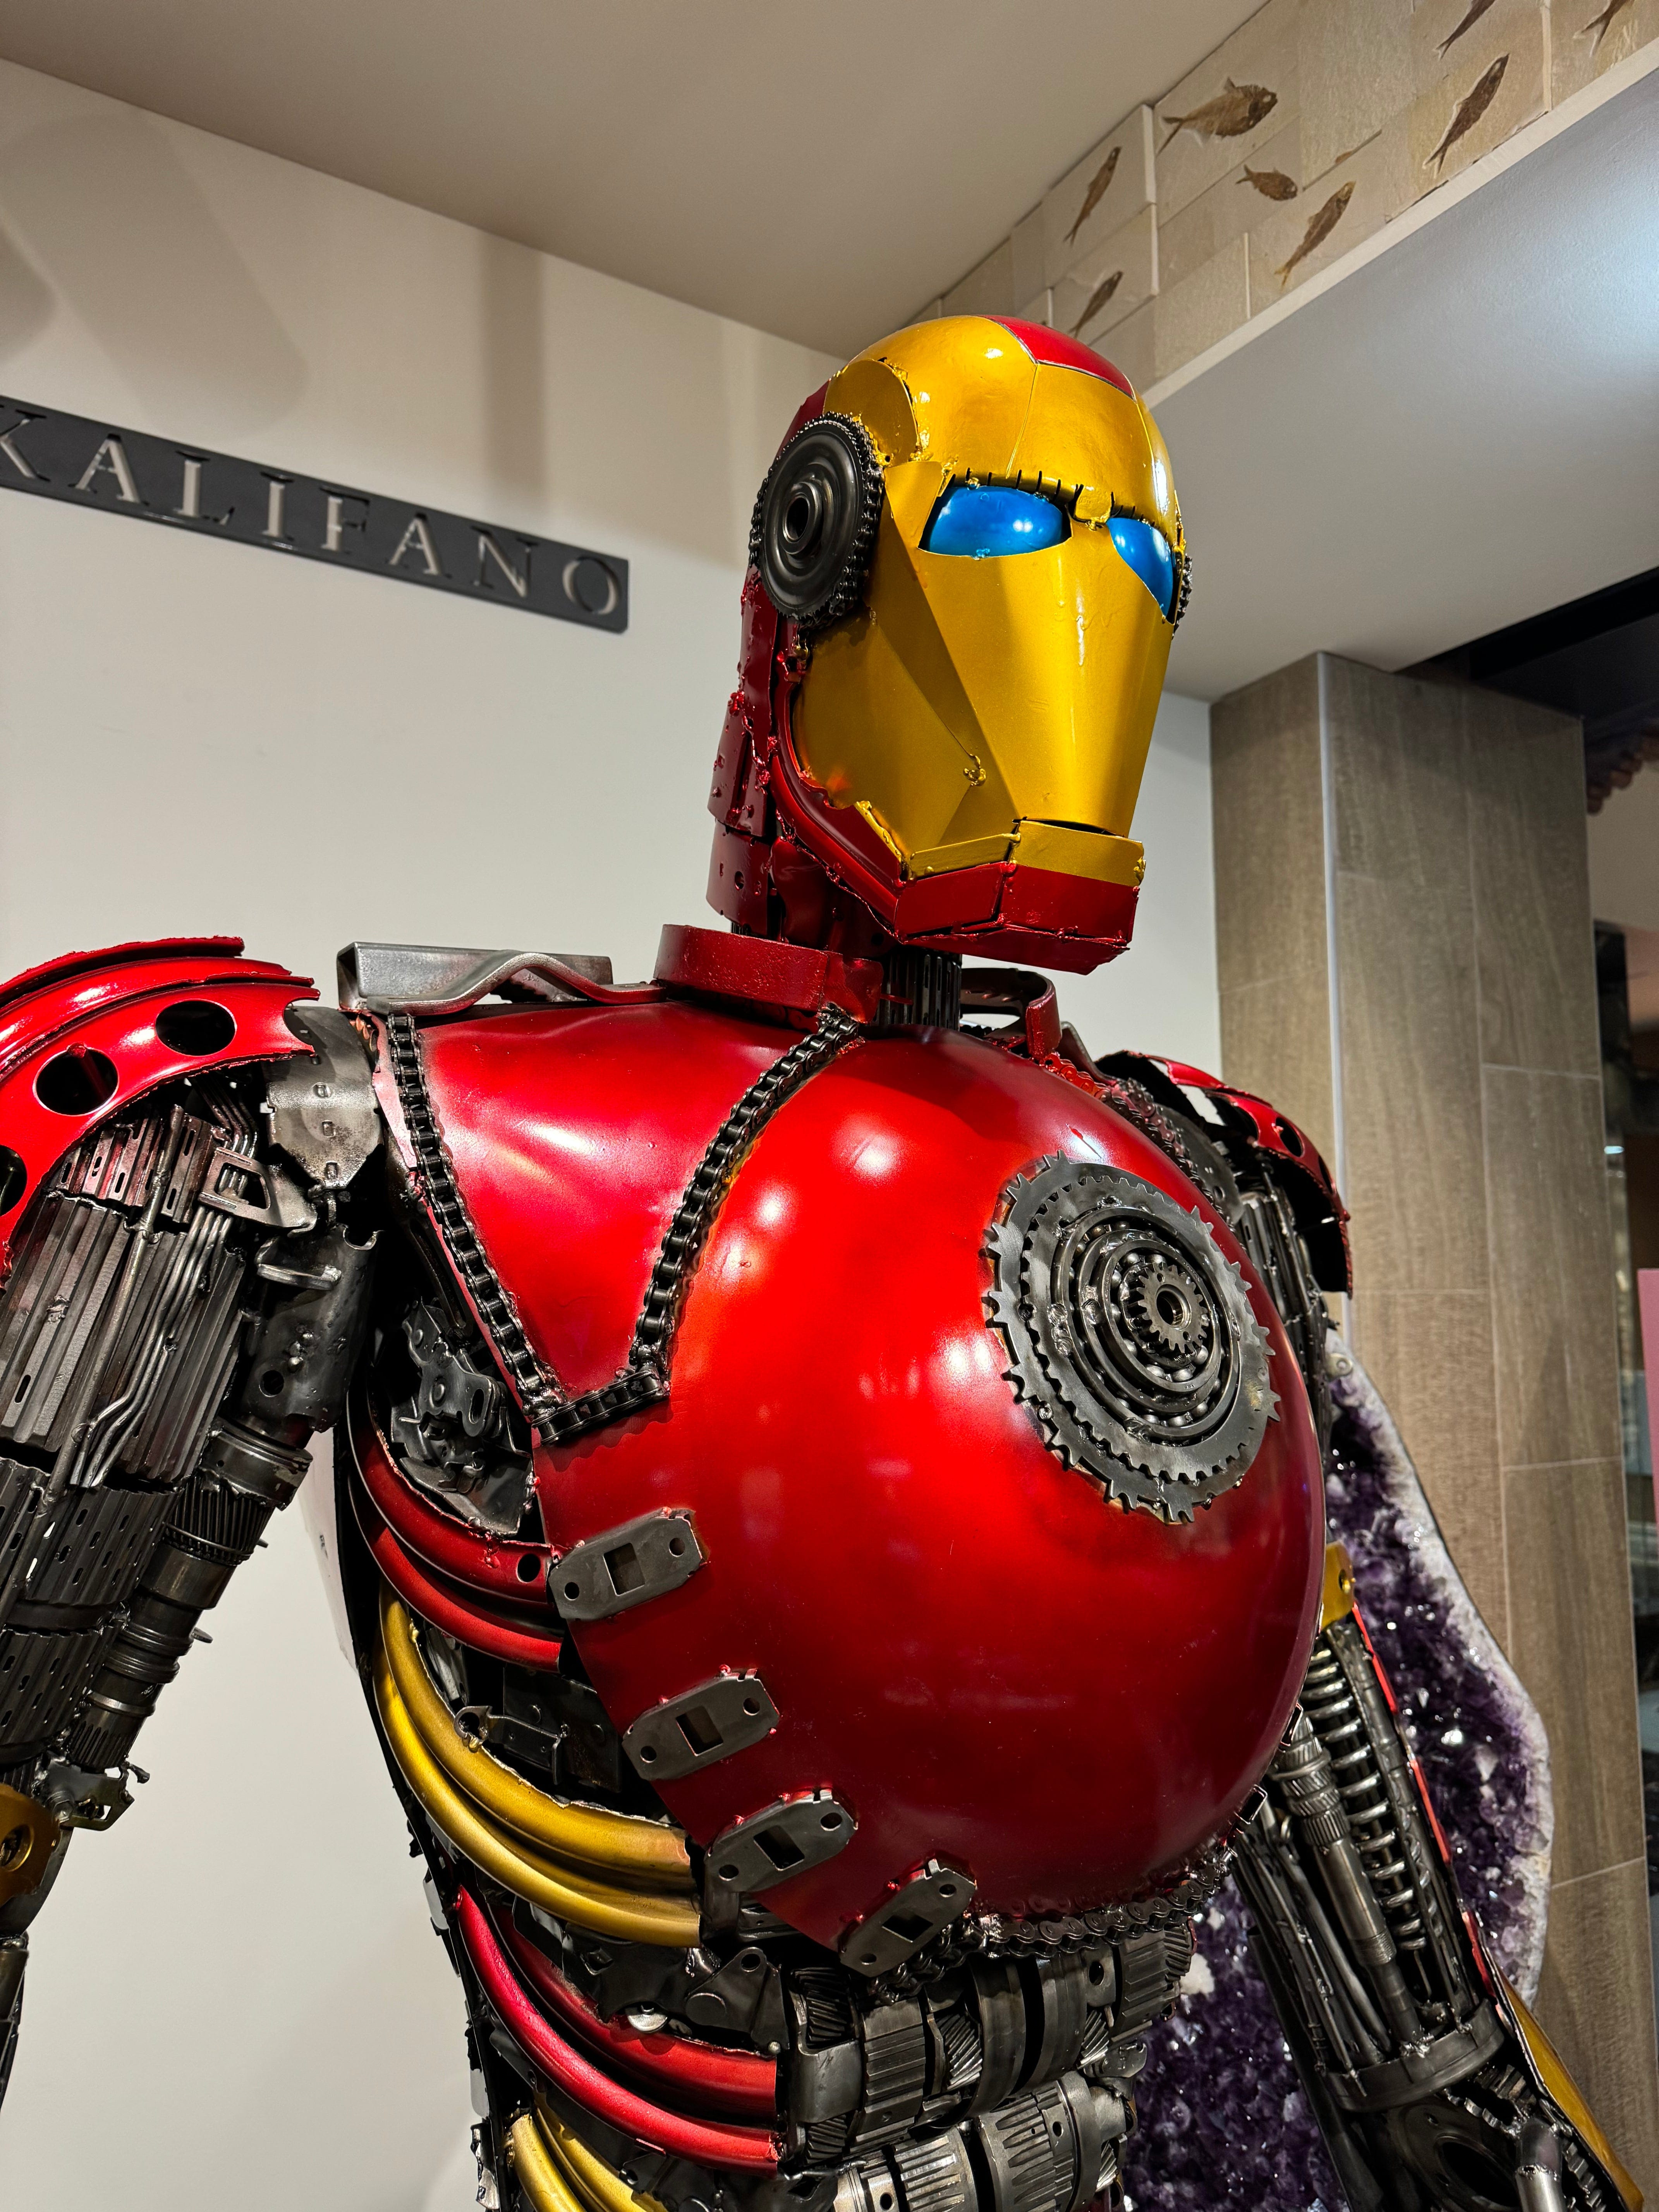 Kalifano Recycled Metal Art 91" Iron Man Inspired Recycled Metal Art Sculpture RMS-IMR230-S12